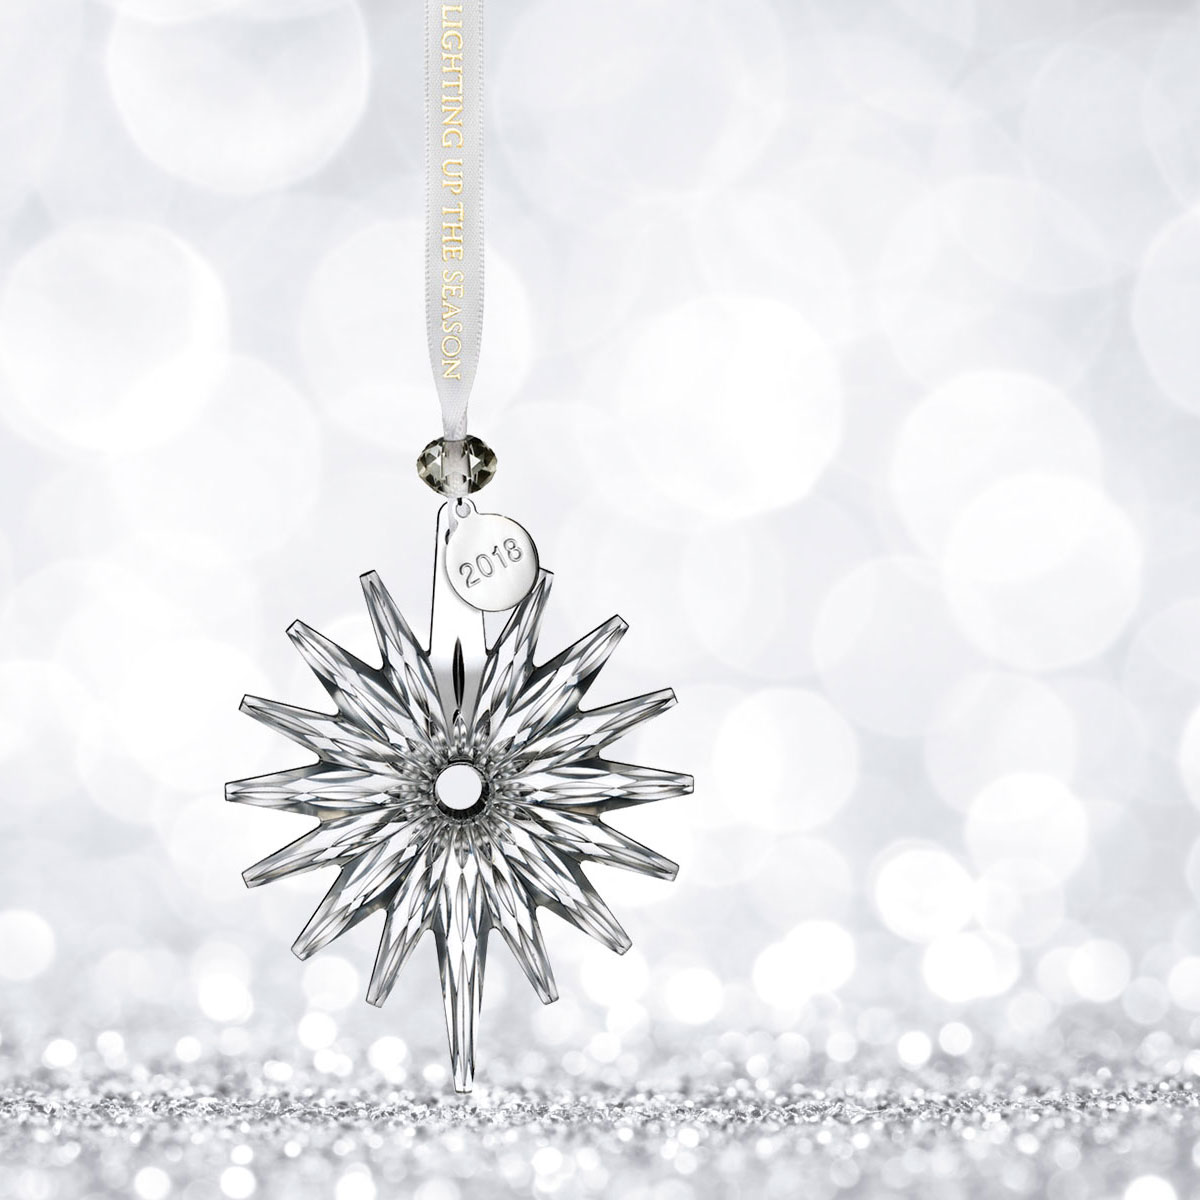 Waterford Crystal 2018 Annual Snow Crystal Pierced Ornament